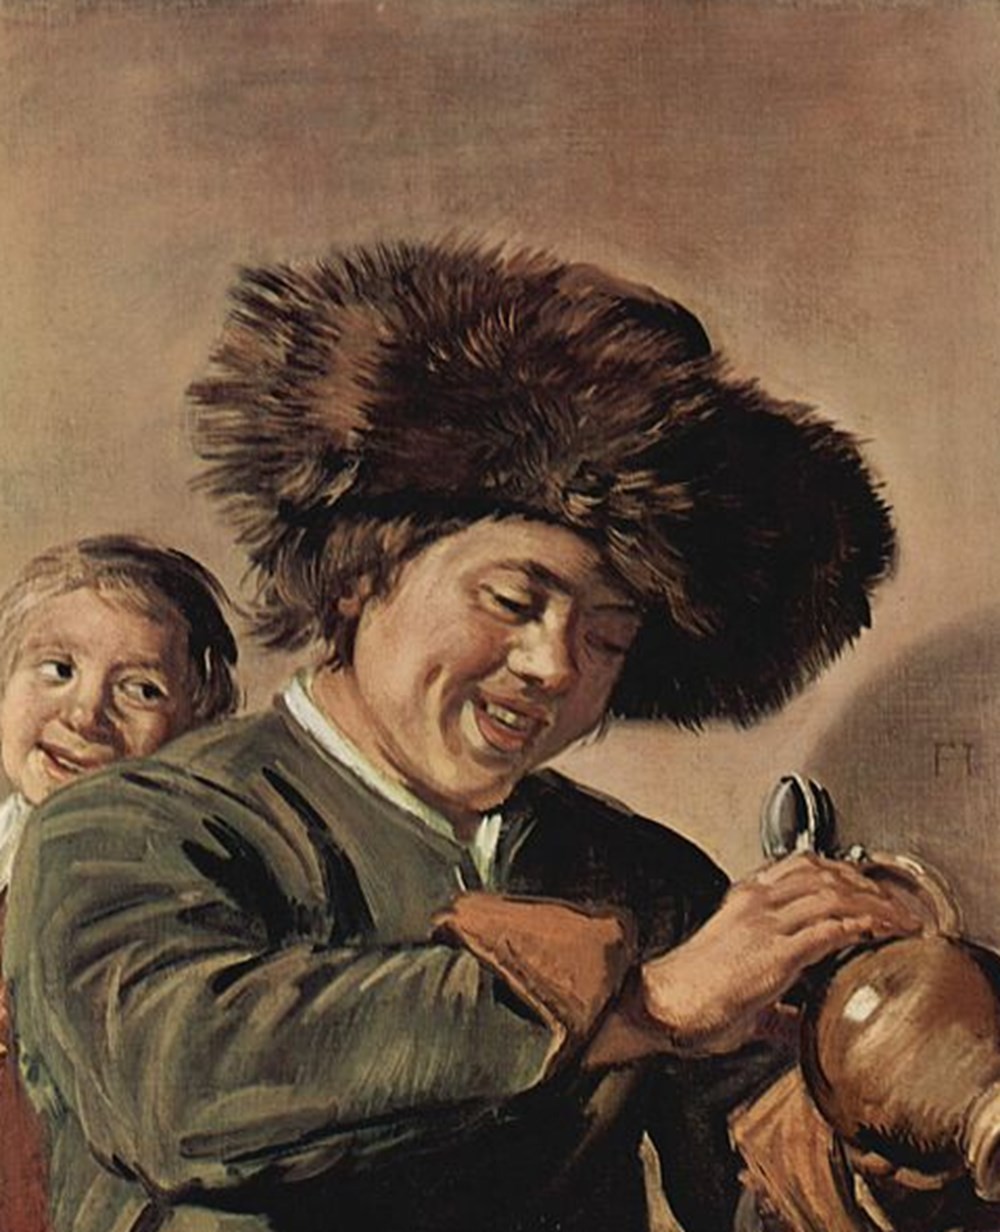 Hollanda'da ressam Frans Hals'a ait İki gülen çocuk tablosu 3. defa çalındı